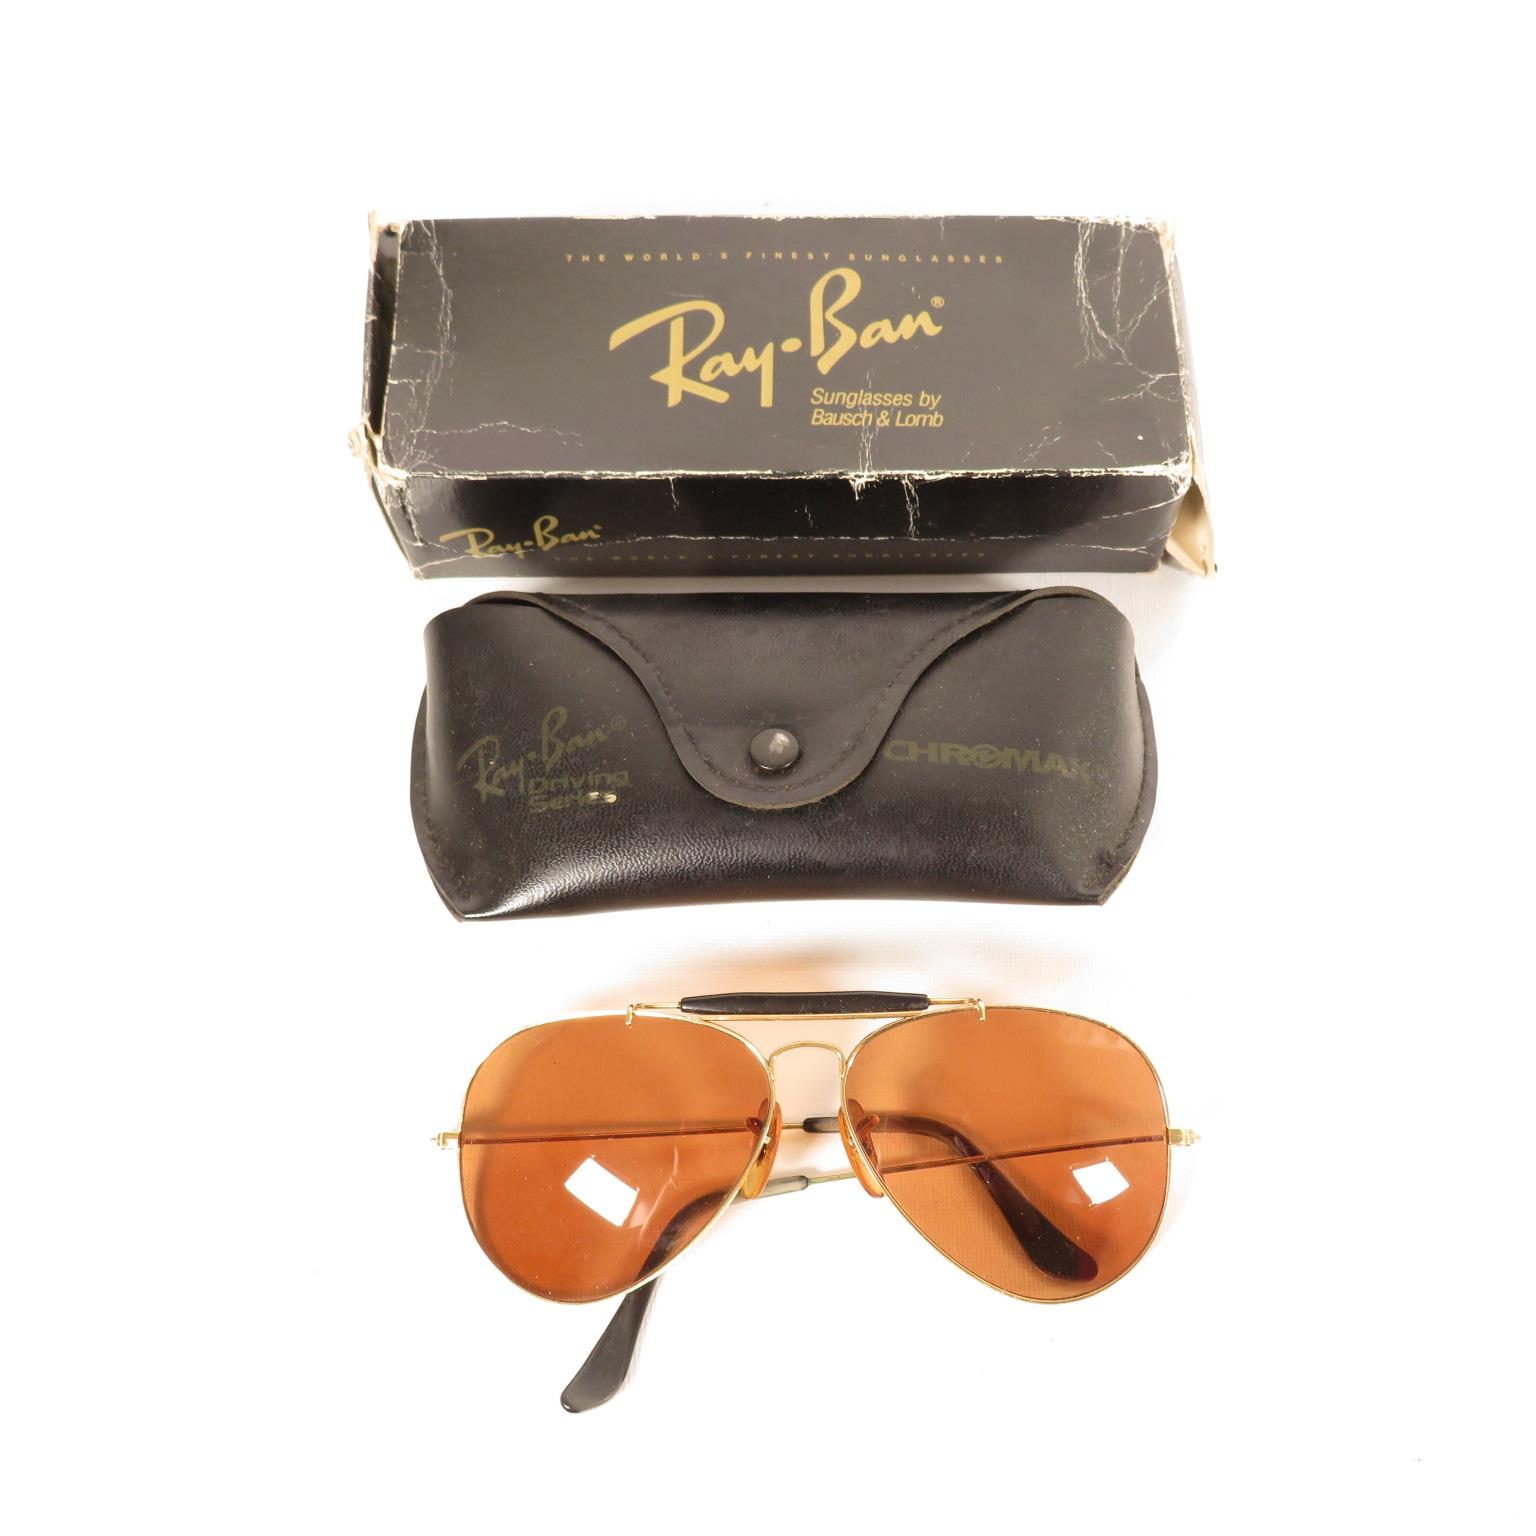 4x boxed Ray Bans Sunglasses - - Image 7 of 20